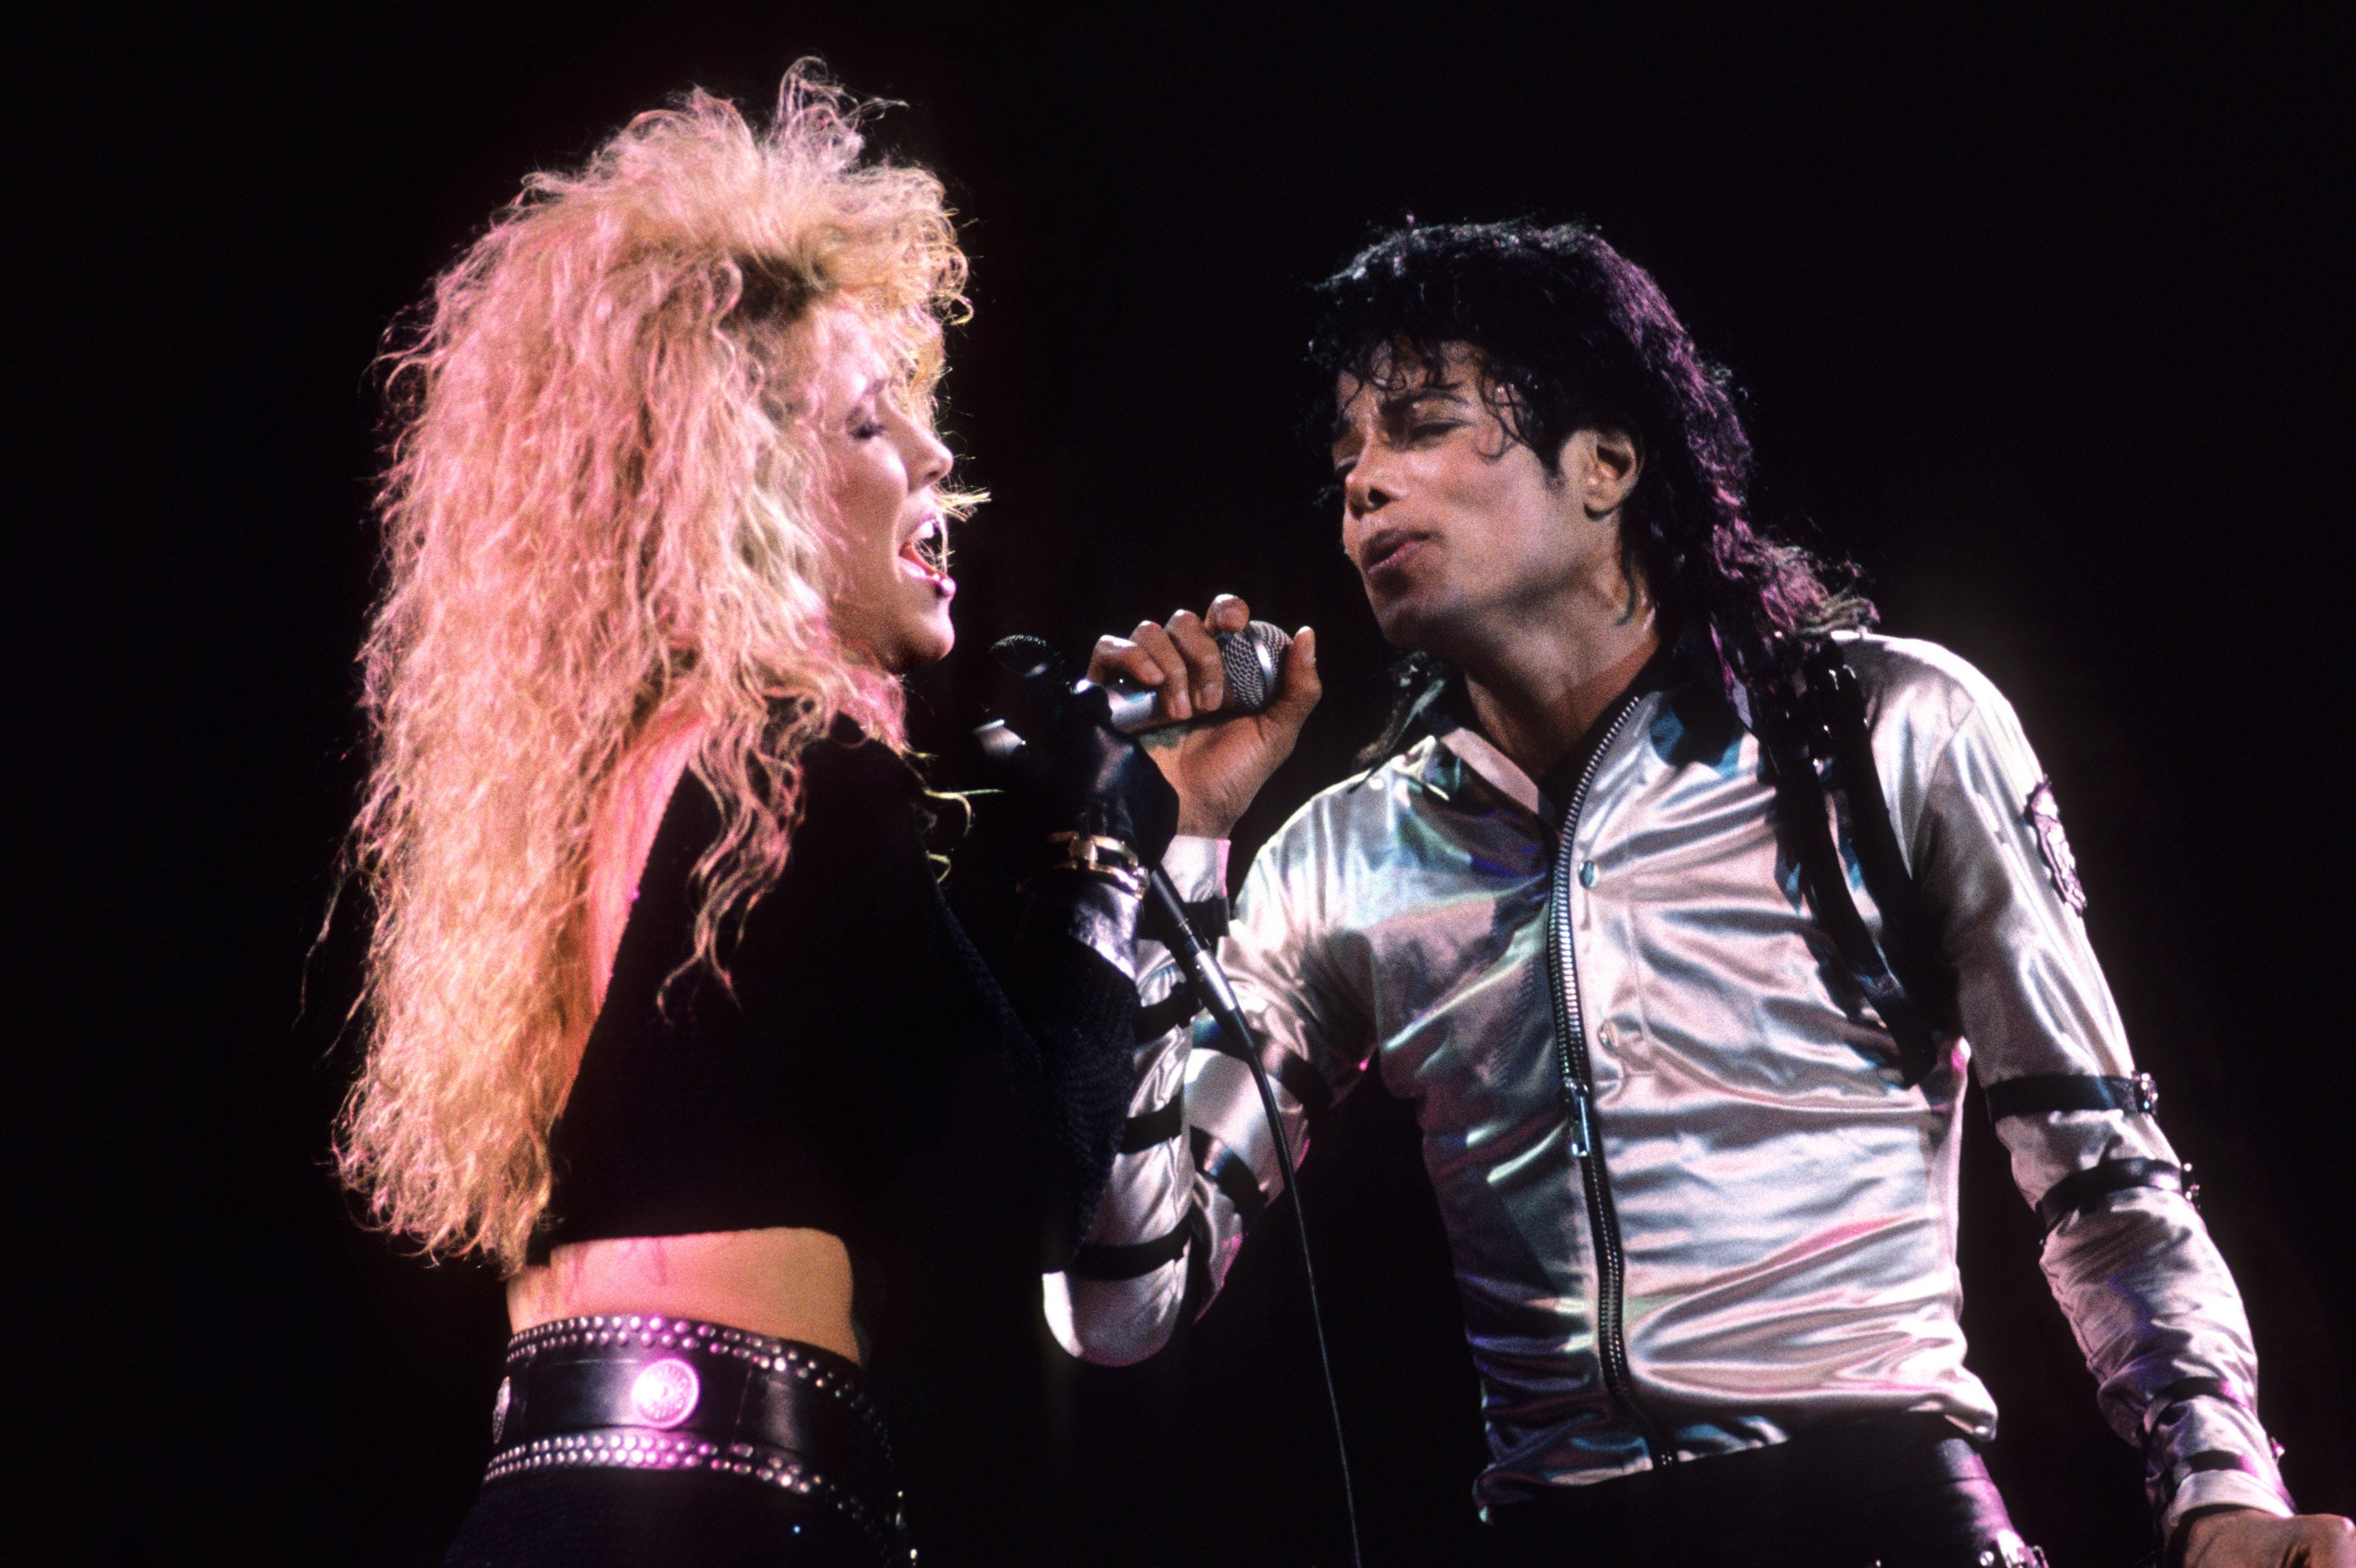 Sheryl Crow and Michael Jackson perform during the Bad tour, circa 1988